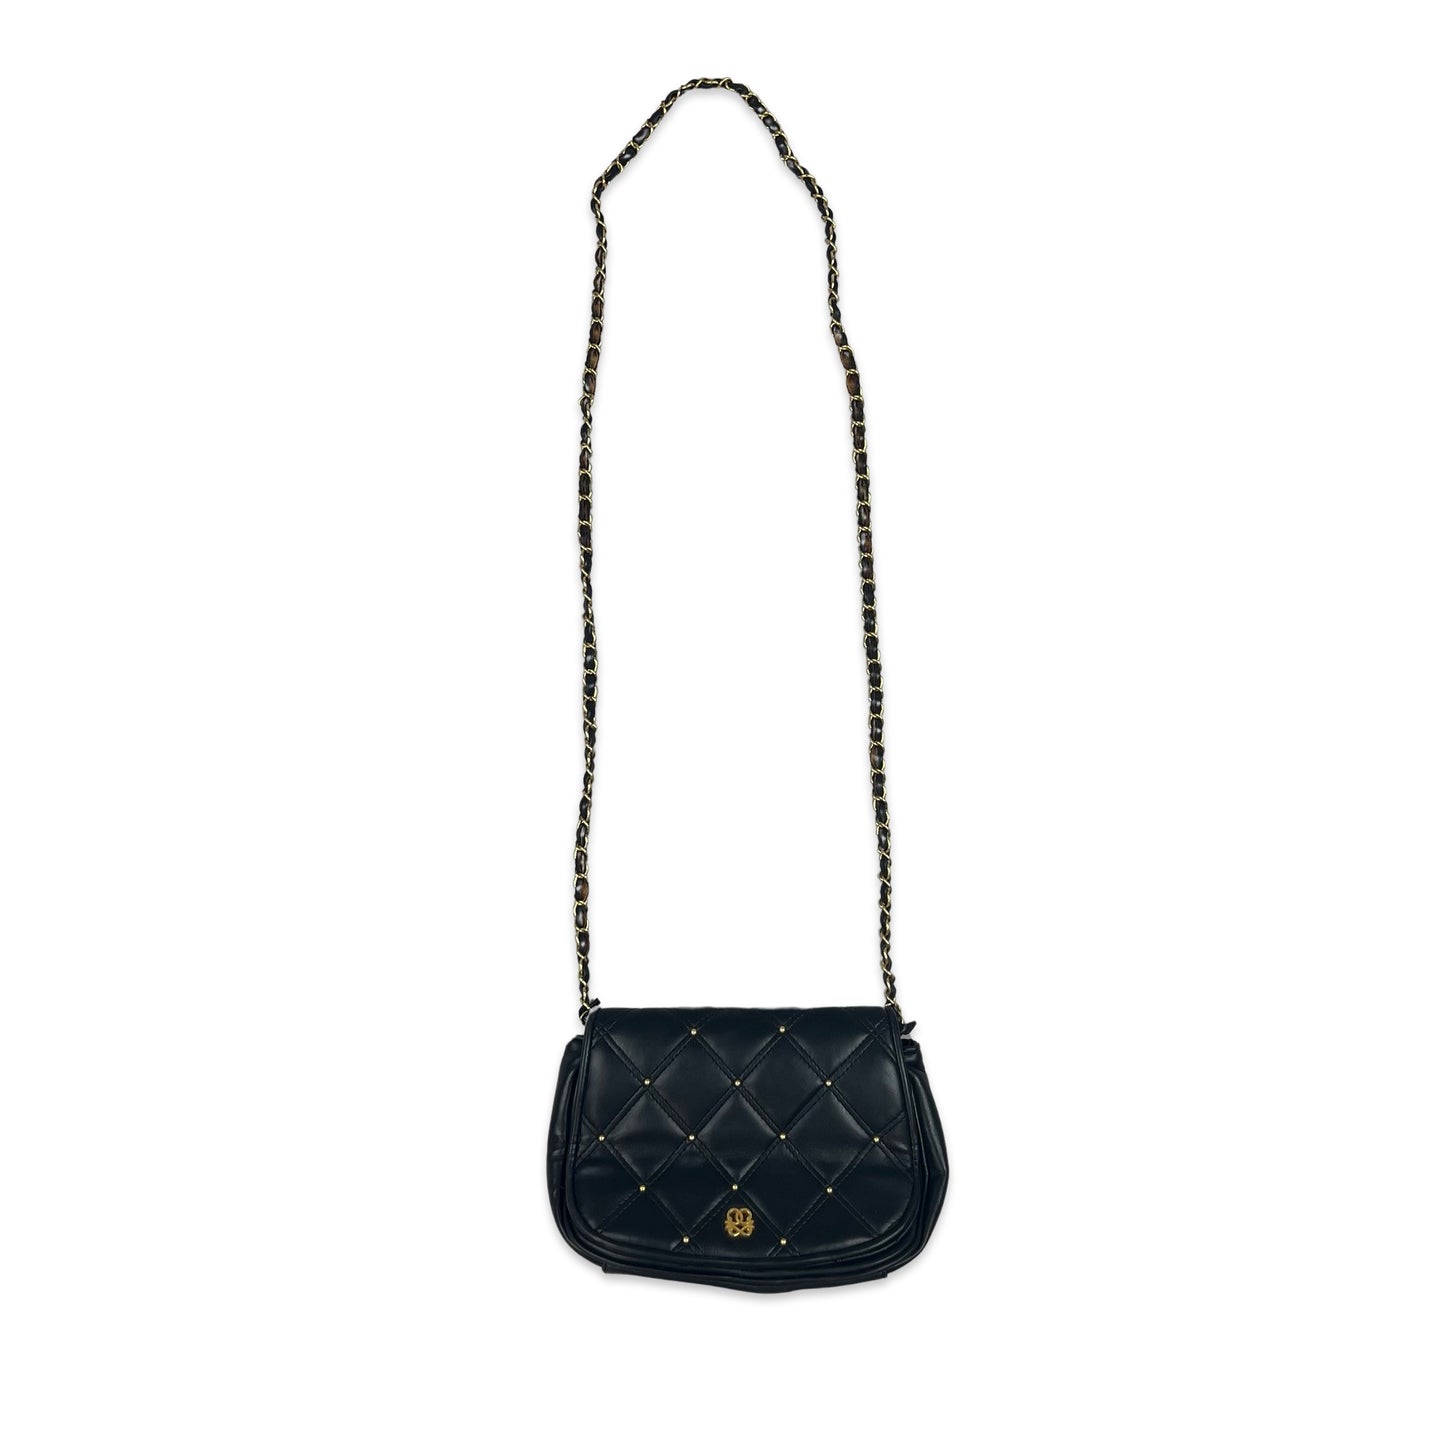 00s Vintage Quilted Leather Crossbody Handbag Black Gold